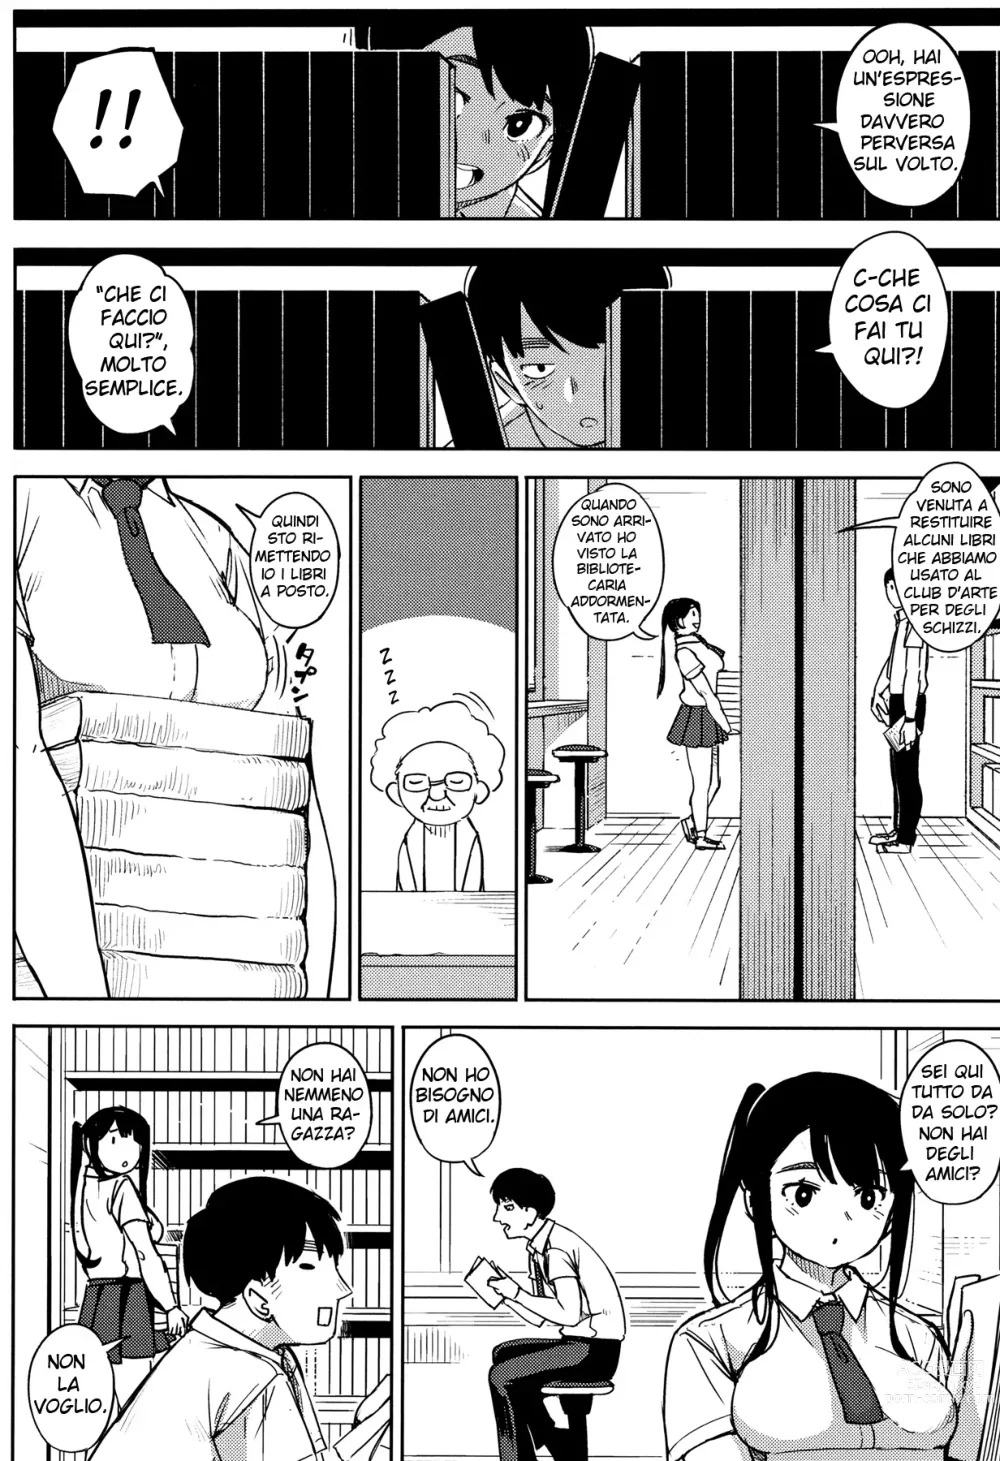 Page 4 of manga Invader